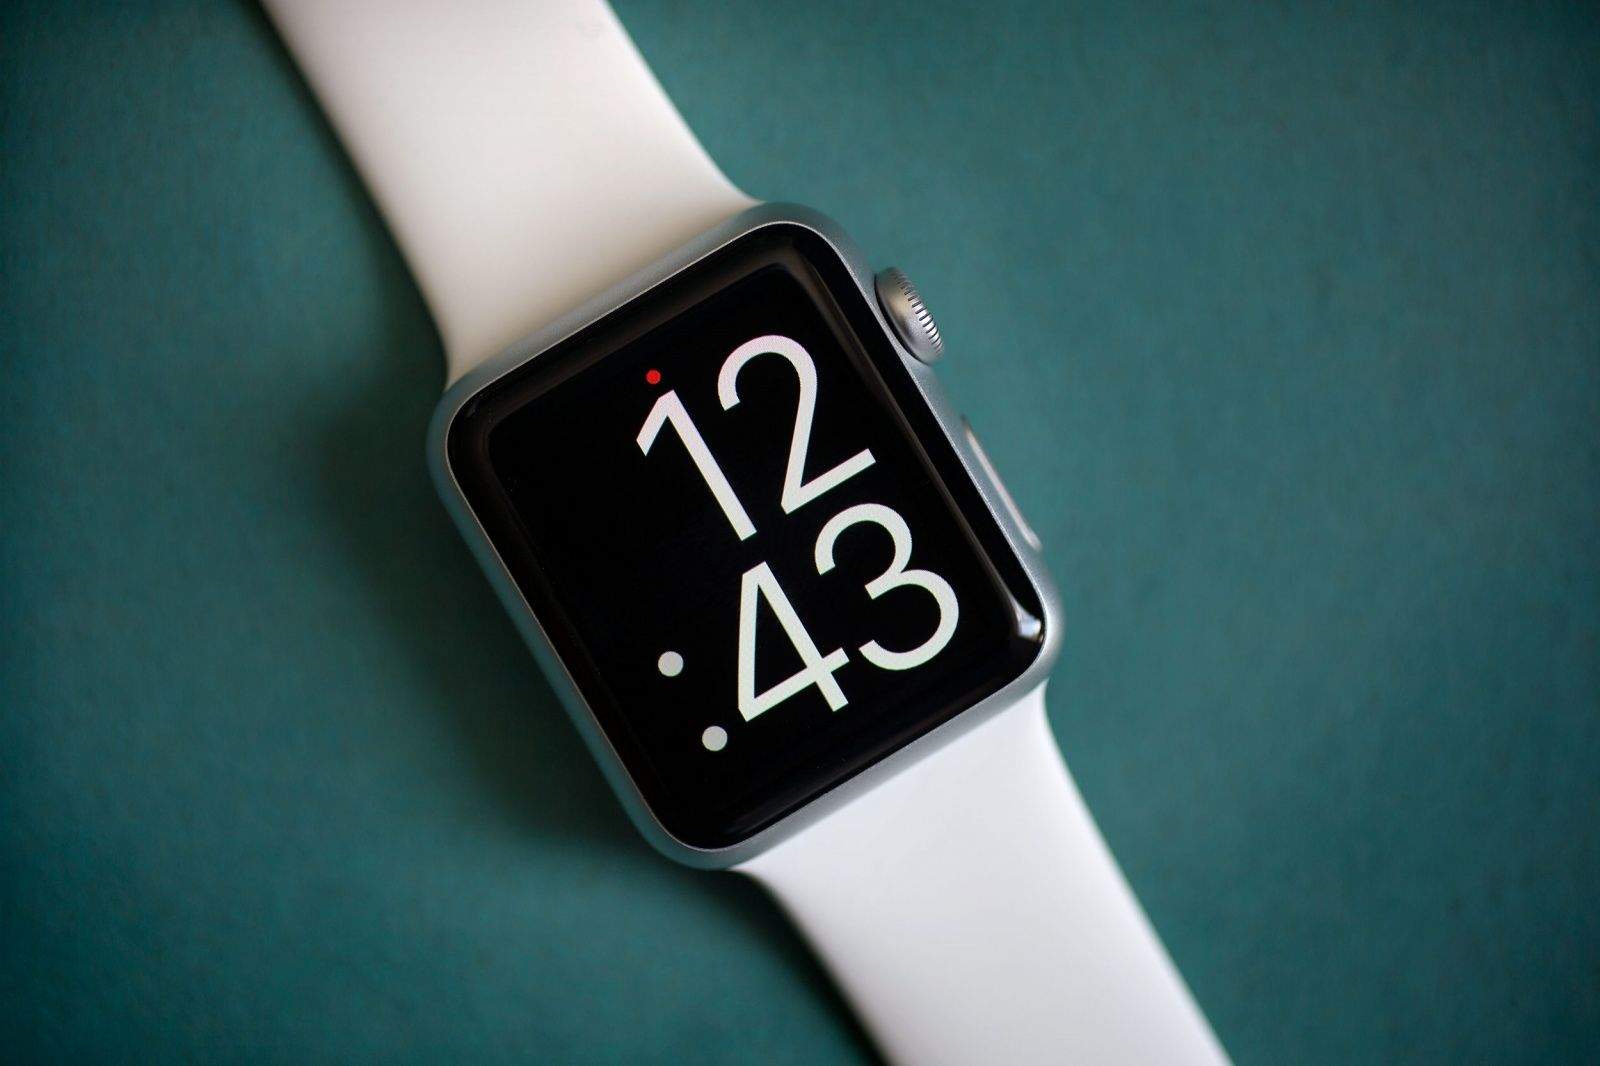 Часы apple аналог. Часы Аппле аналог. Аналог Apple watch. Заставка на циферблат Apple watch. Эпл вотч аналог китайский.